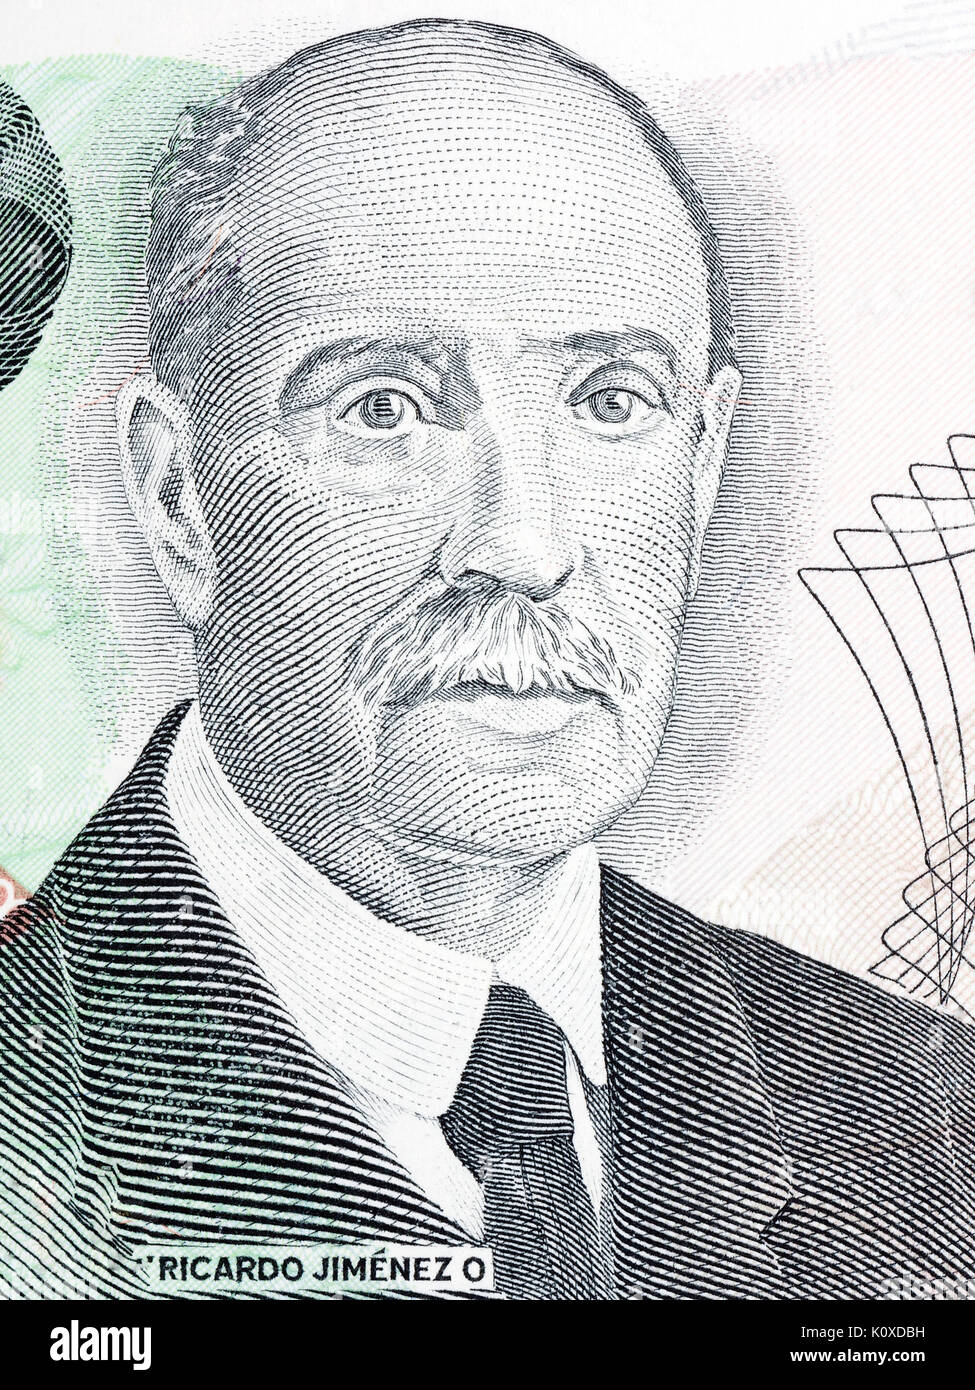 Ricardo Jimenez Oreamuno portrait from Costa Rican money Stock Photo